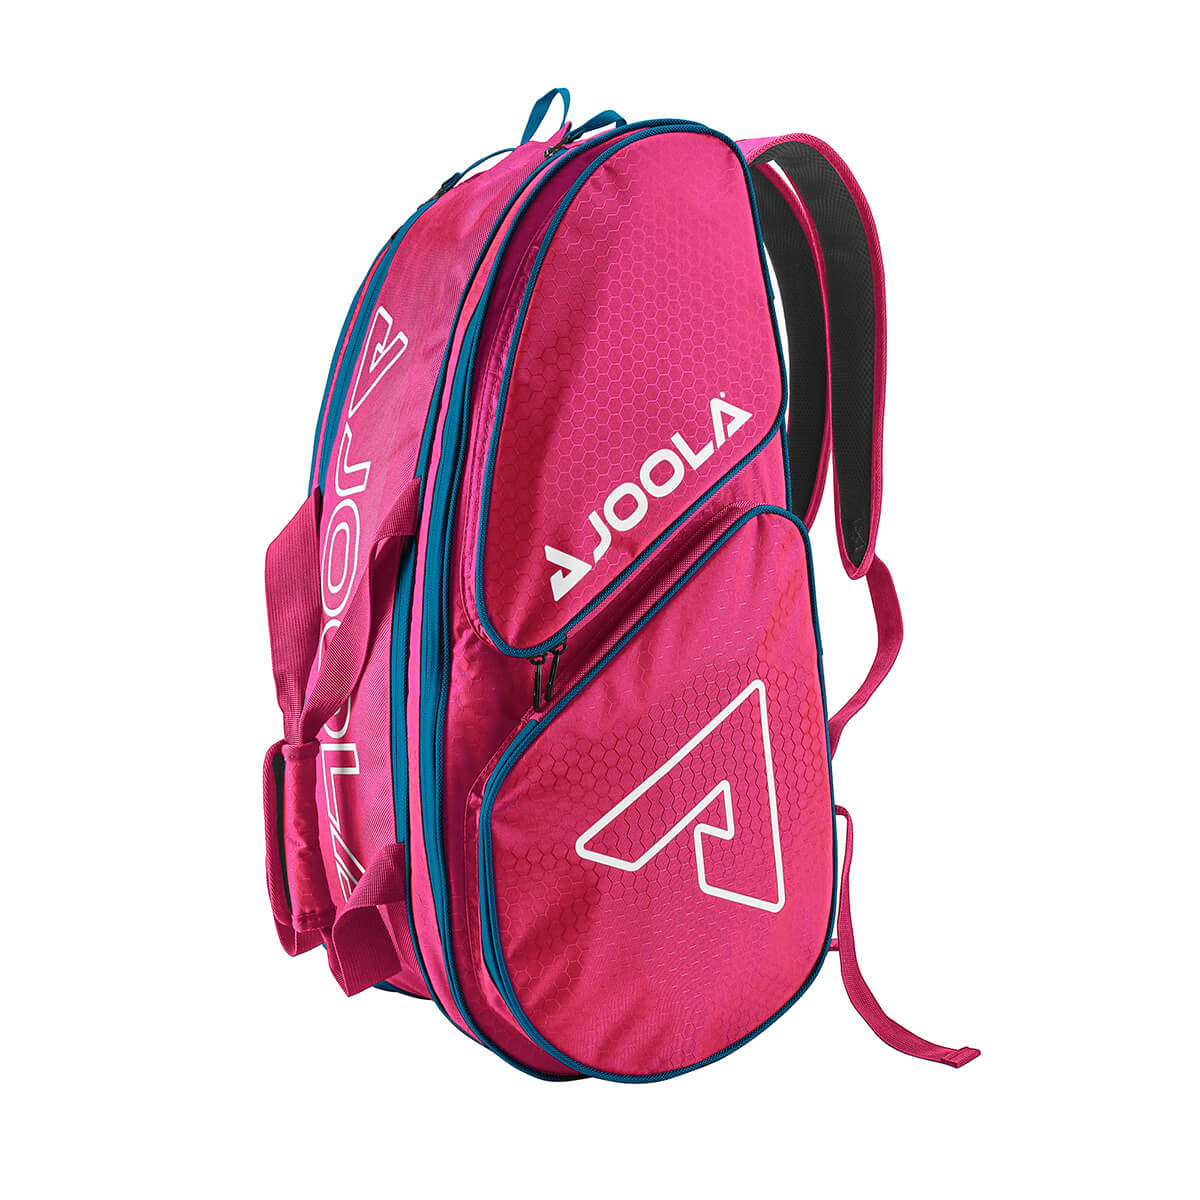 A pink and blue JOOLA Tour Elite Bag Pickleball Bag with the word aloha on it.